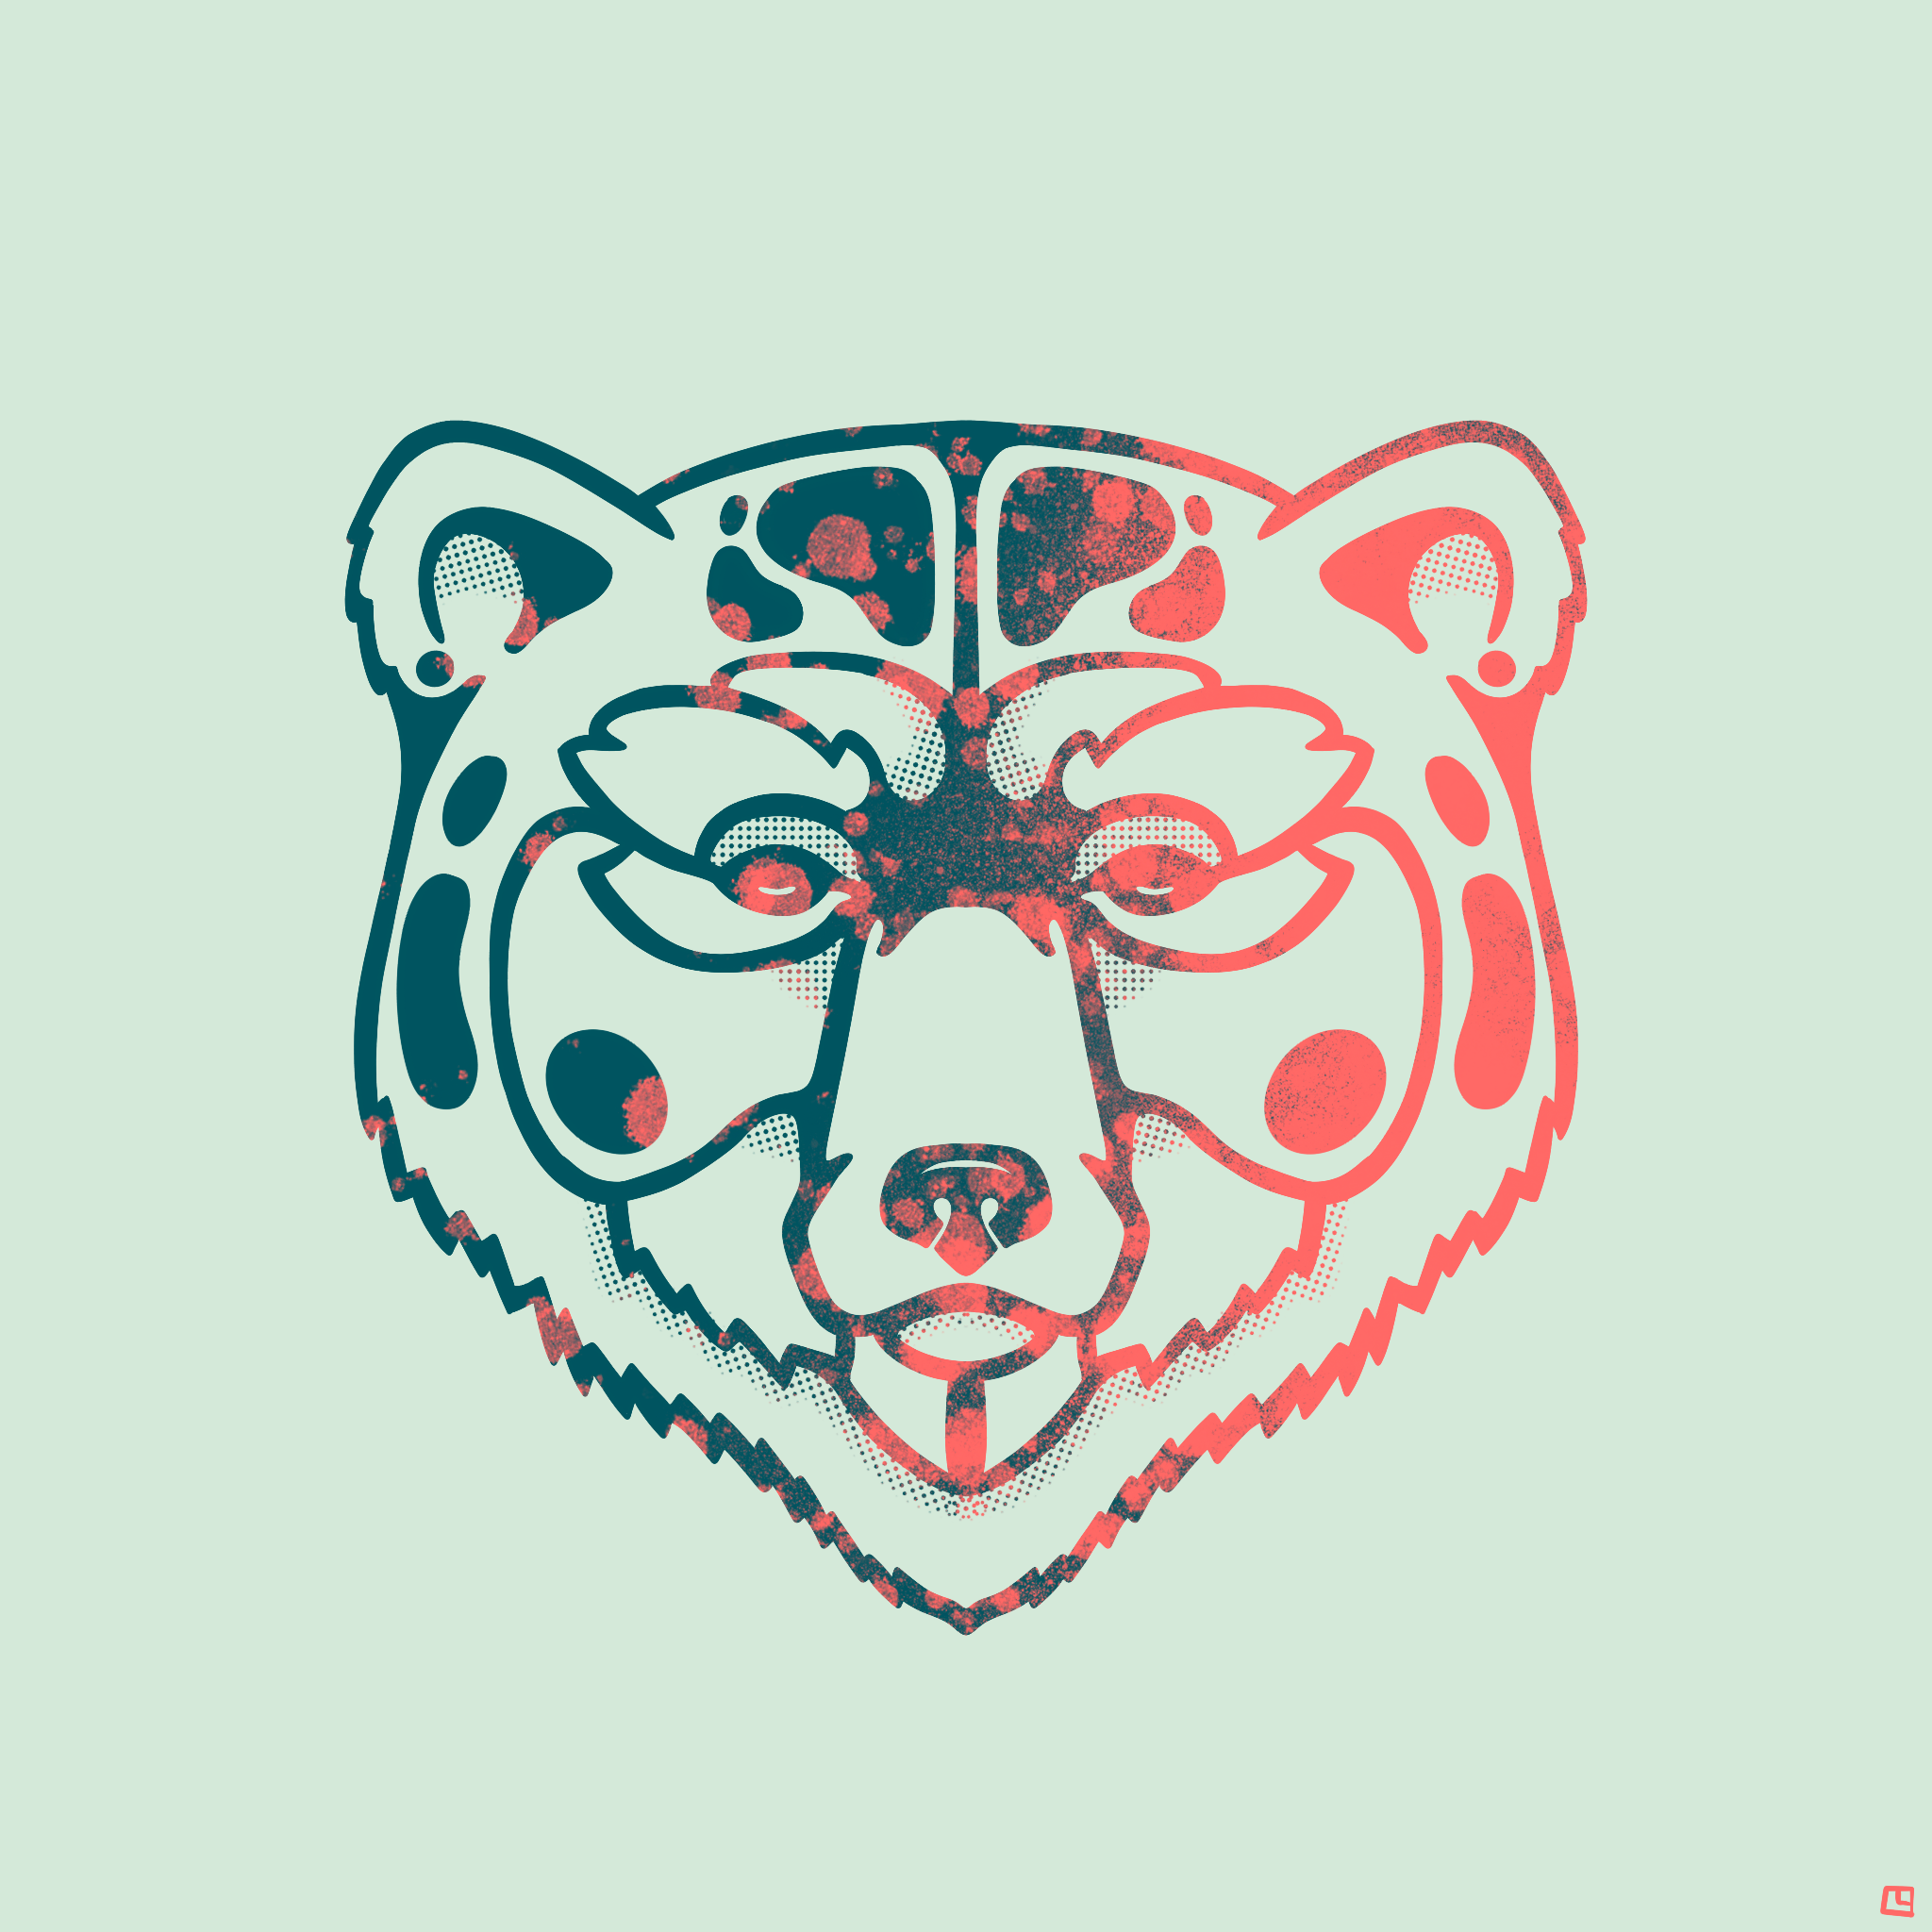 Bear.PNG